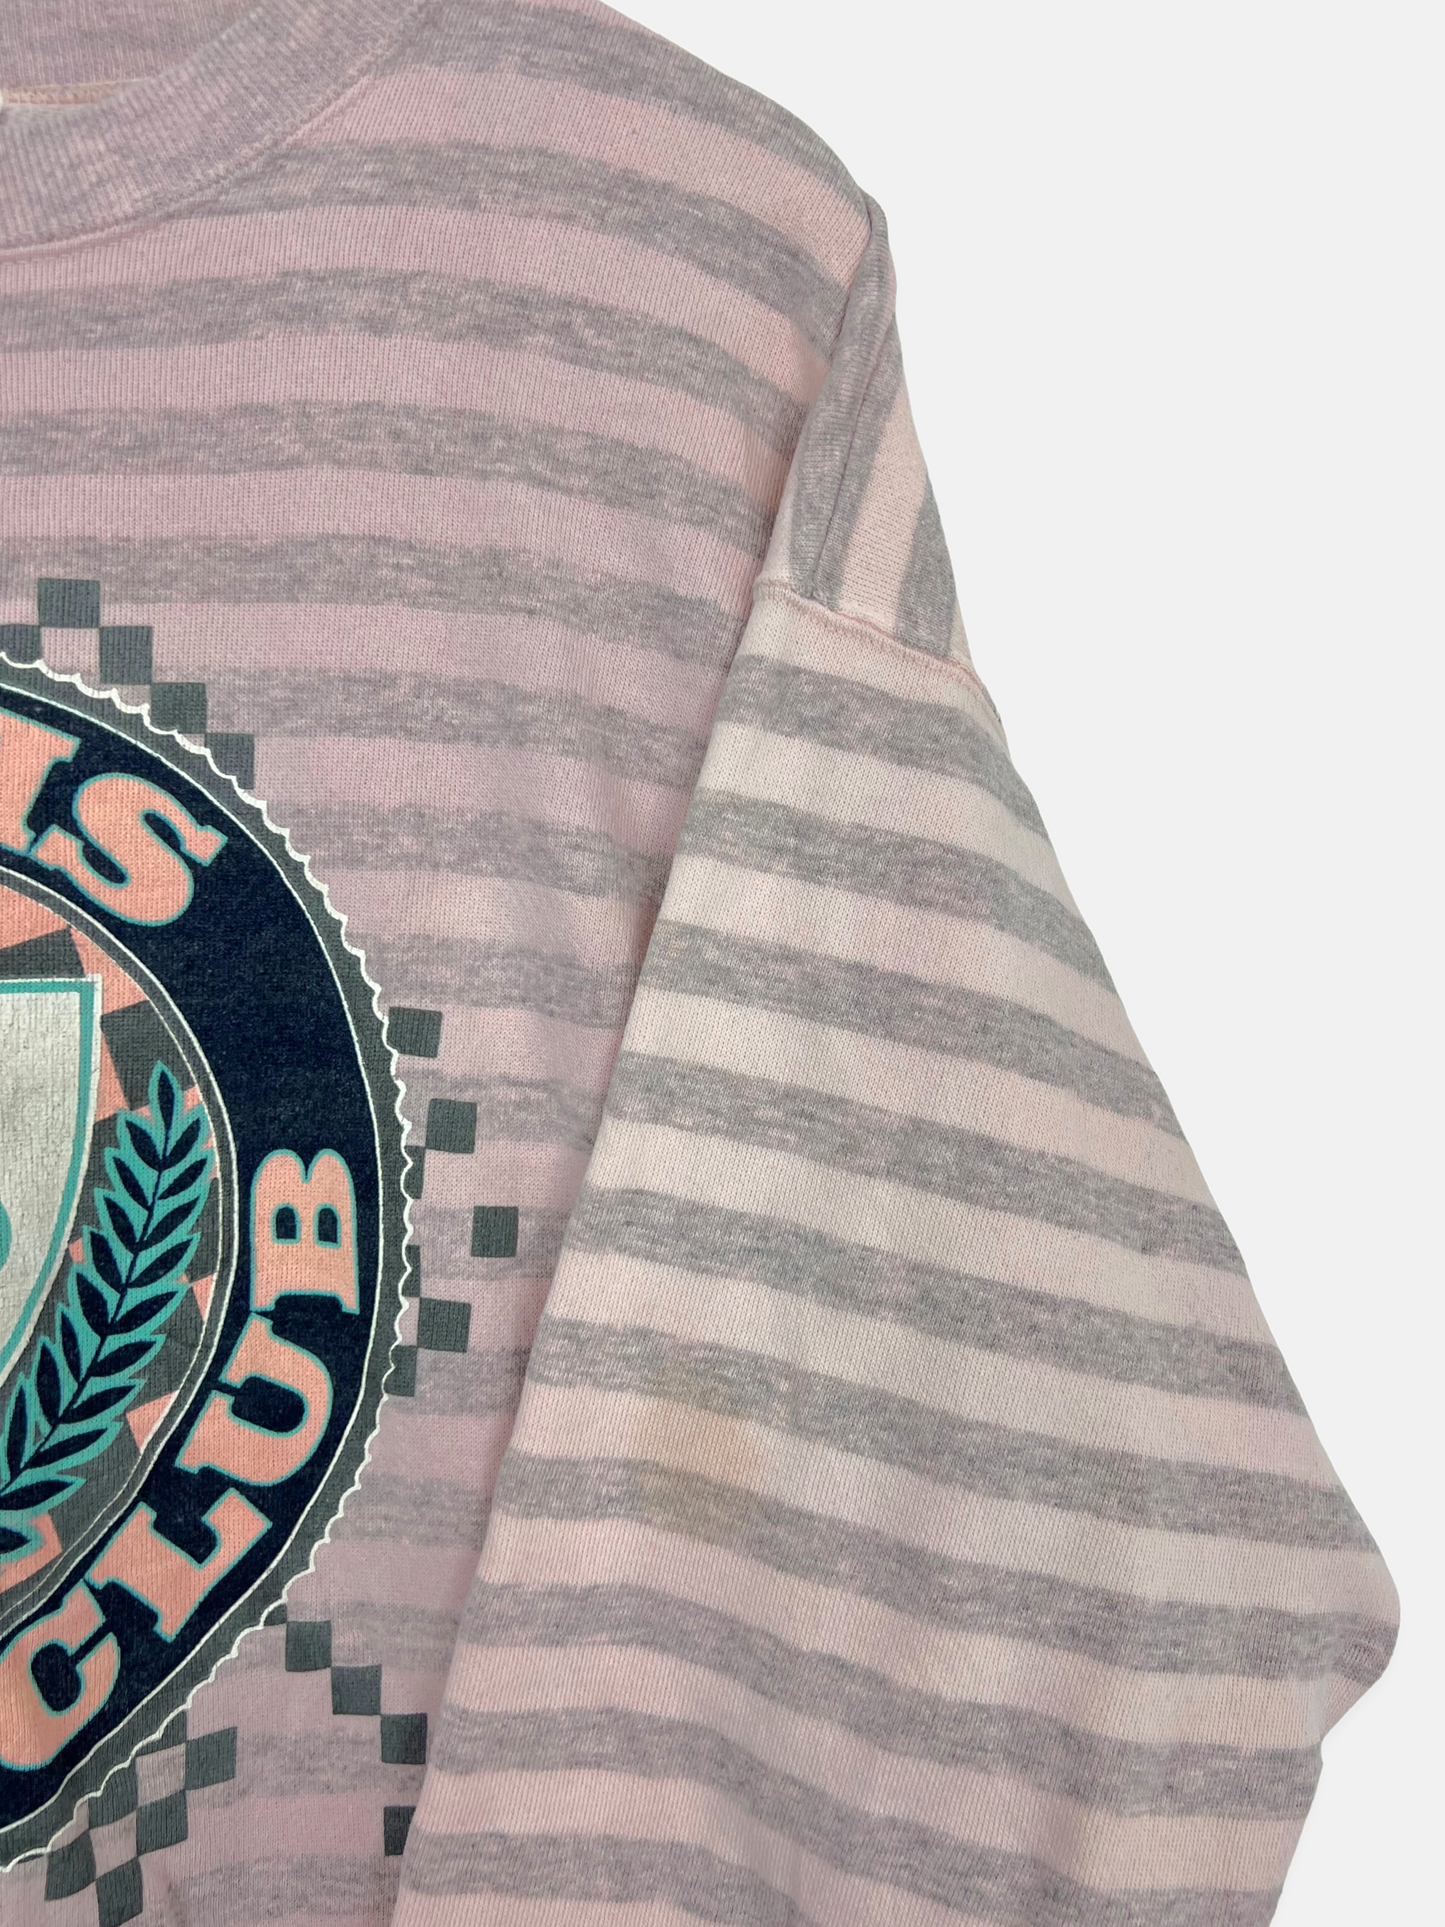 90's Paris Sport Club USA Made Vintage Sweatshirt Size M